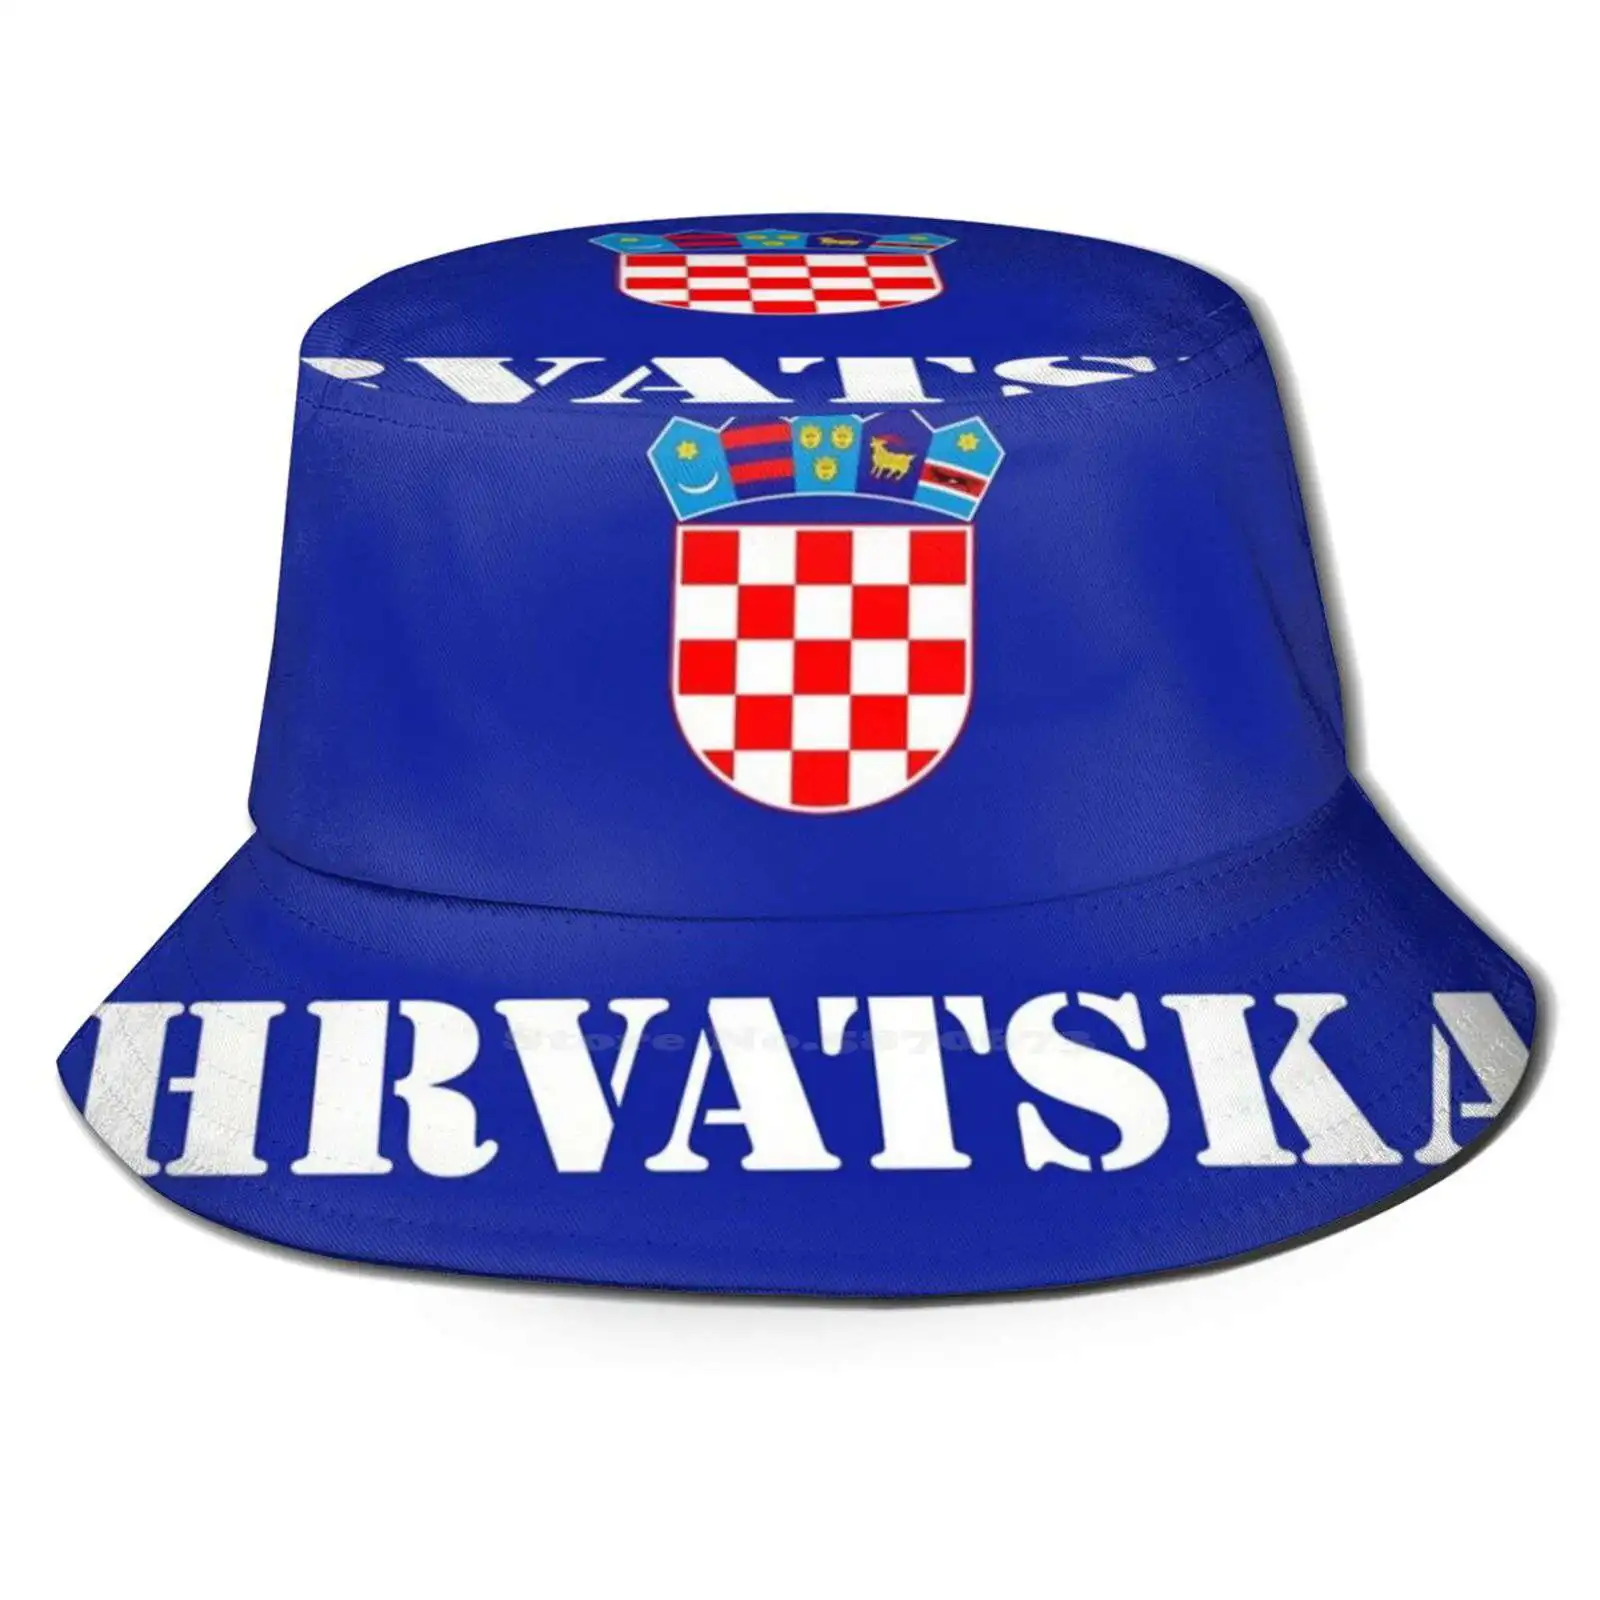 

Хорватия Hrvatska футбол хорватский футбол для женщин мужчин рыбака шляпы Панамы кепки для футбола Хорватия Футбольный флаг Хорватии футбол